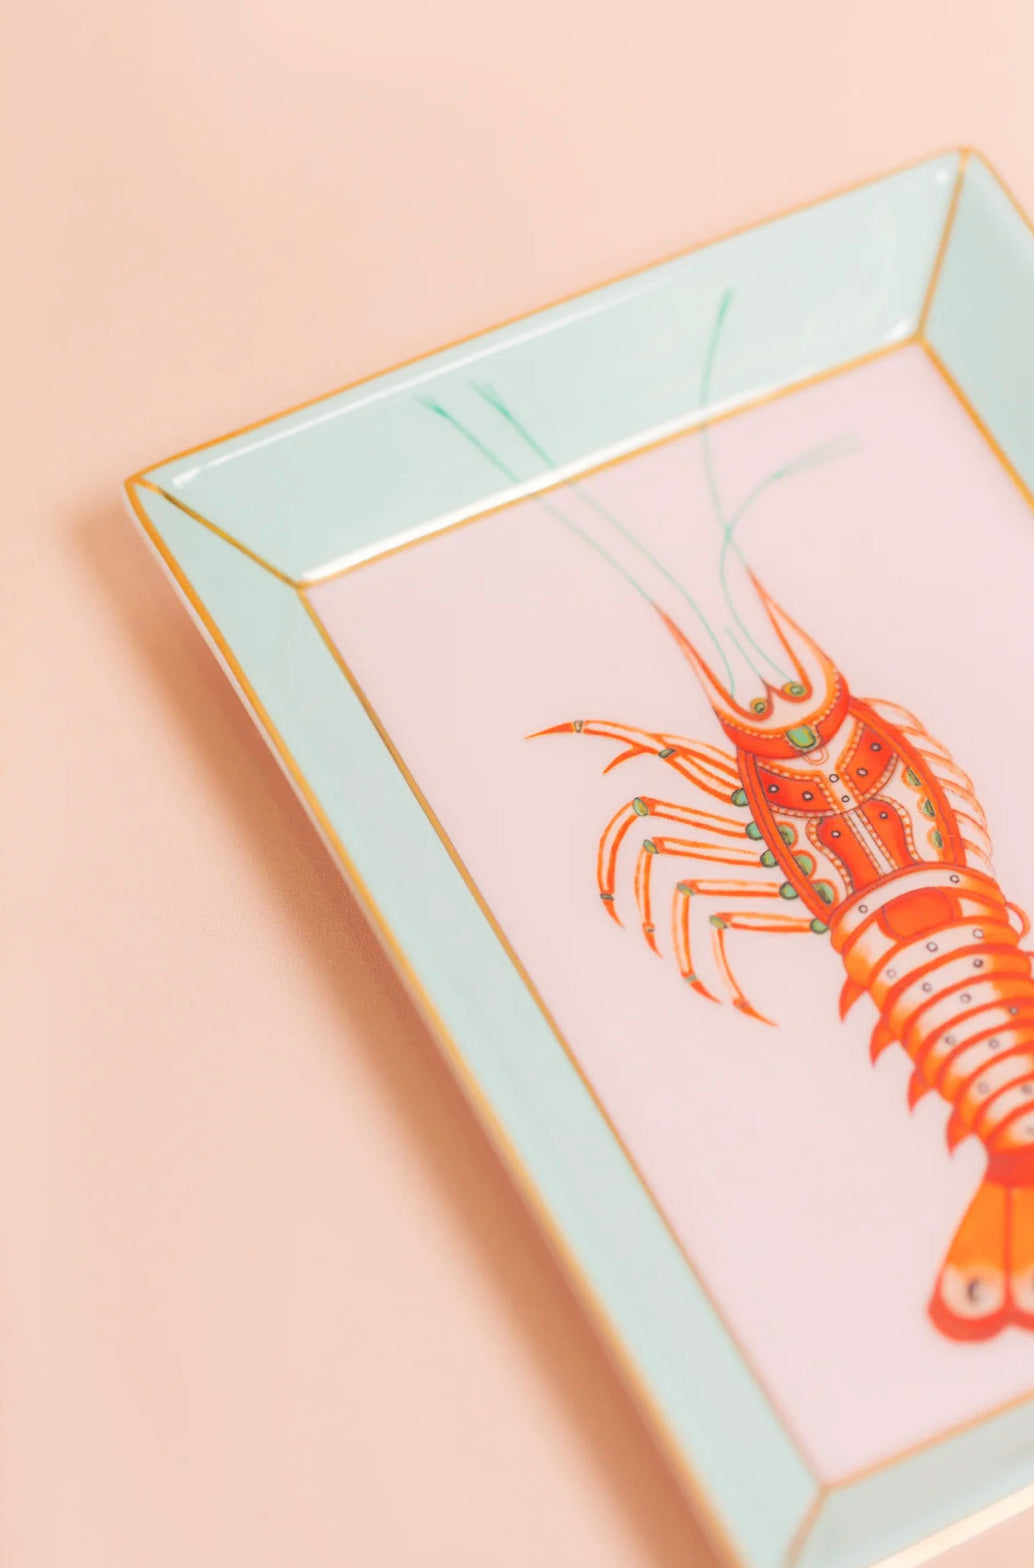 Lobster Rectangular Trinket Dish - Yvonne Ellen